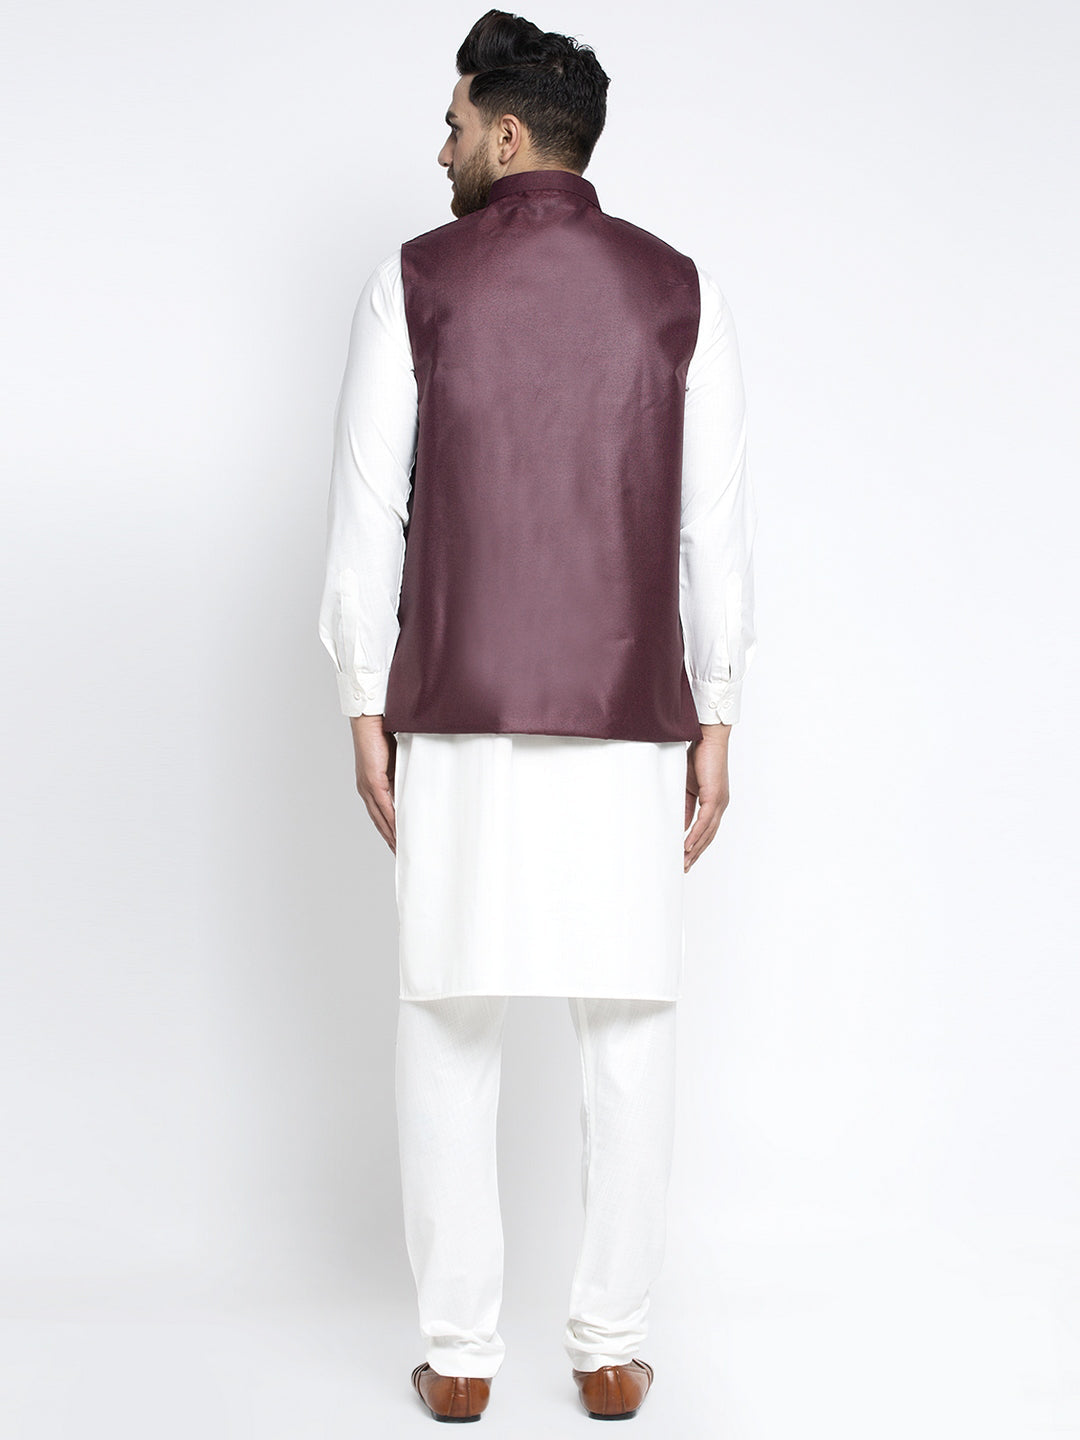 Men's Solid White Cotton Kurta Payjama with Solid Maroon Waistcoat ( JOKPWC OW-F 4021 Maroon ) - Virat Fashions